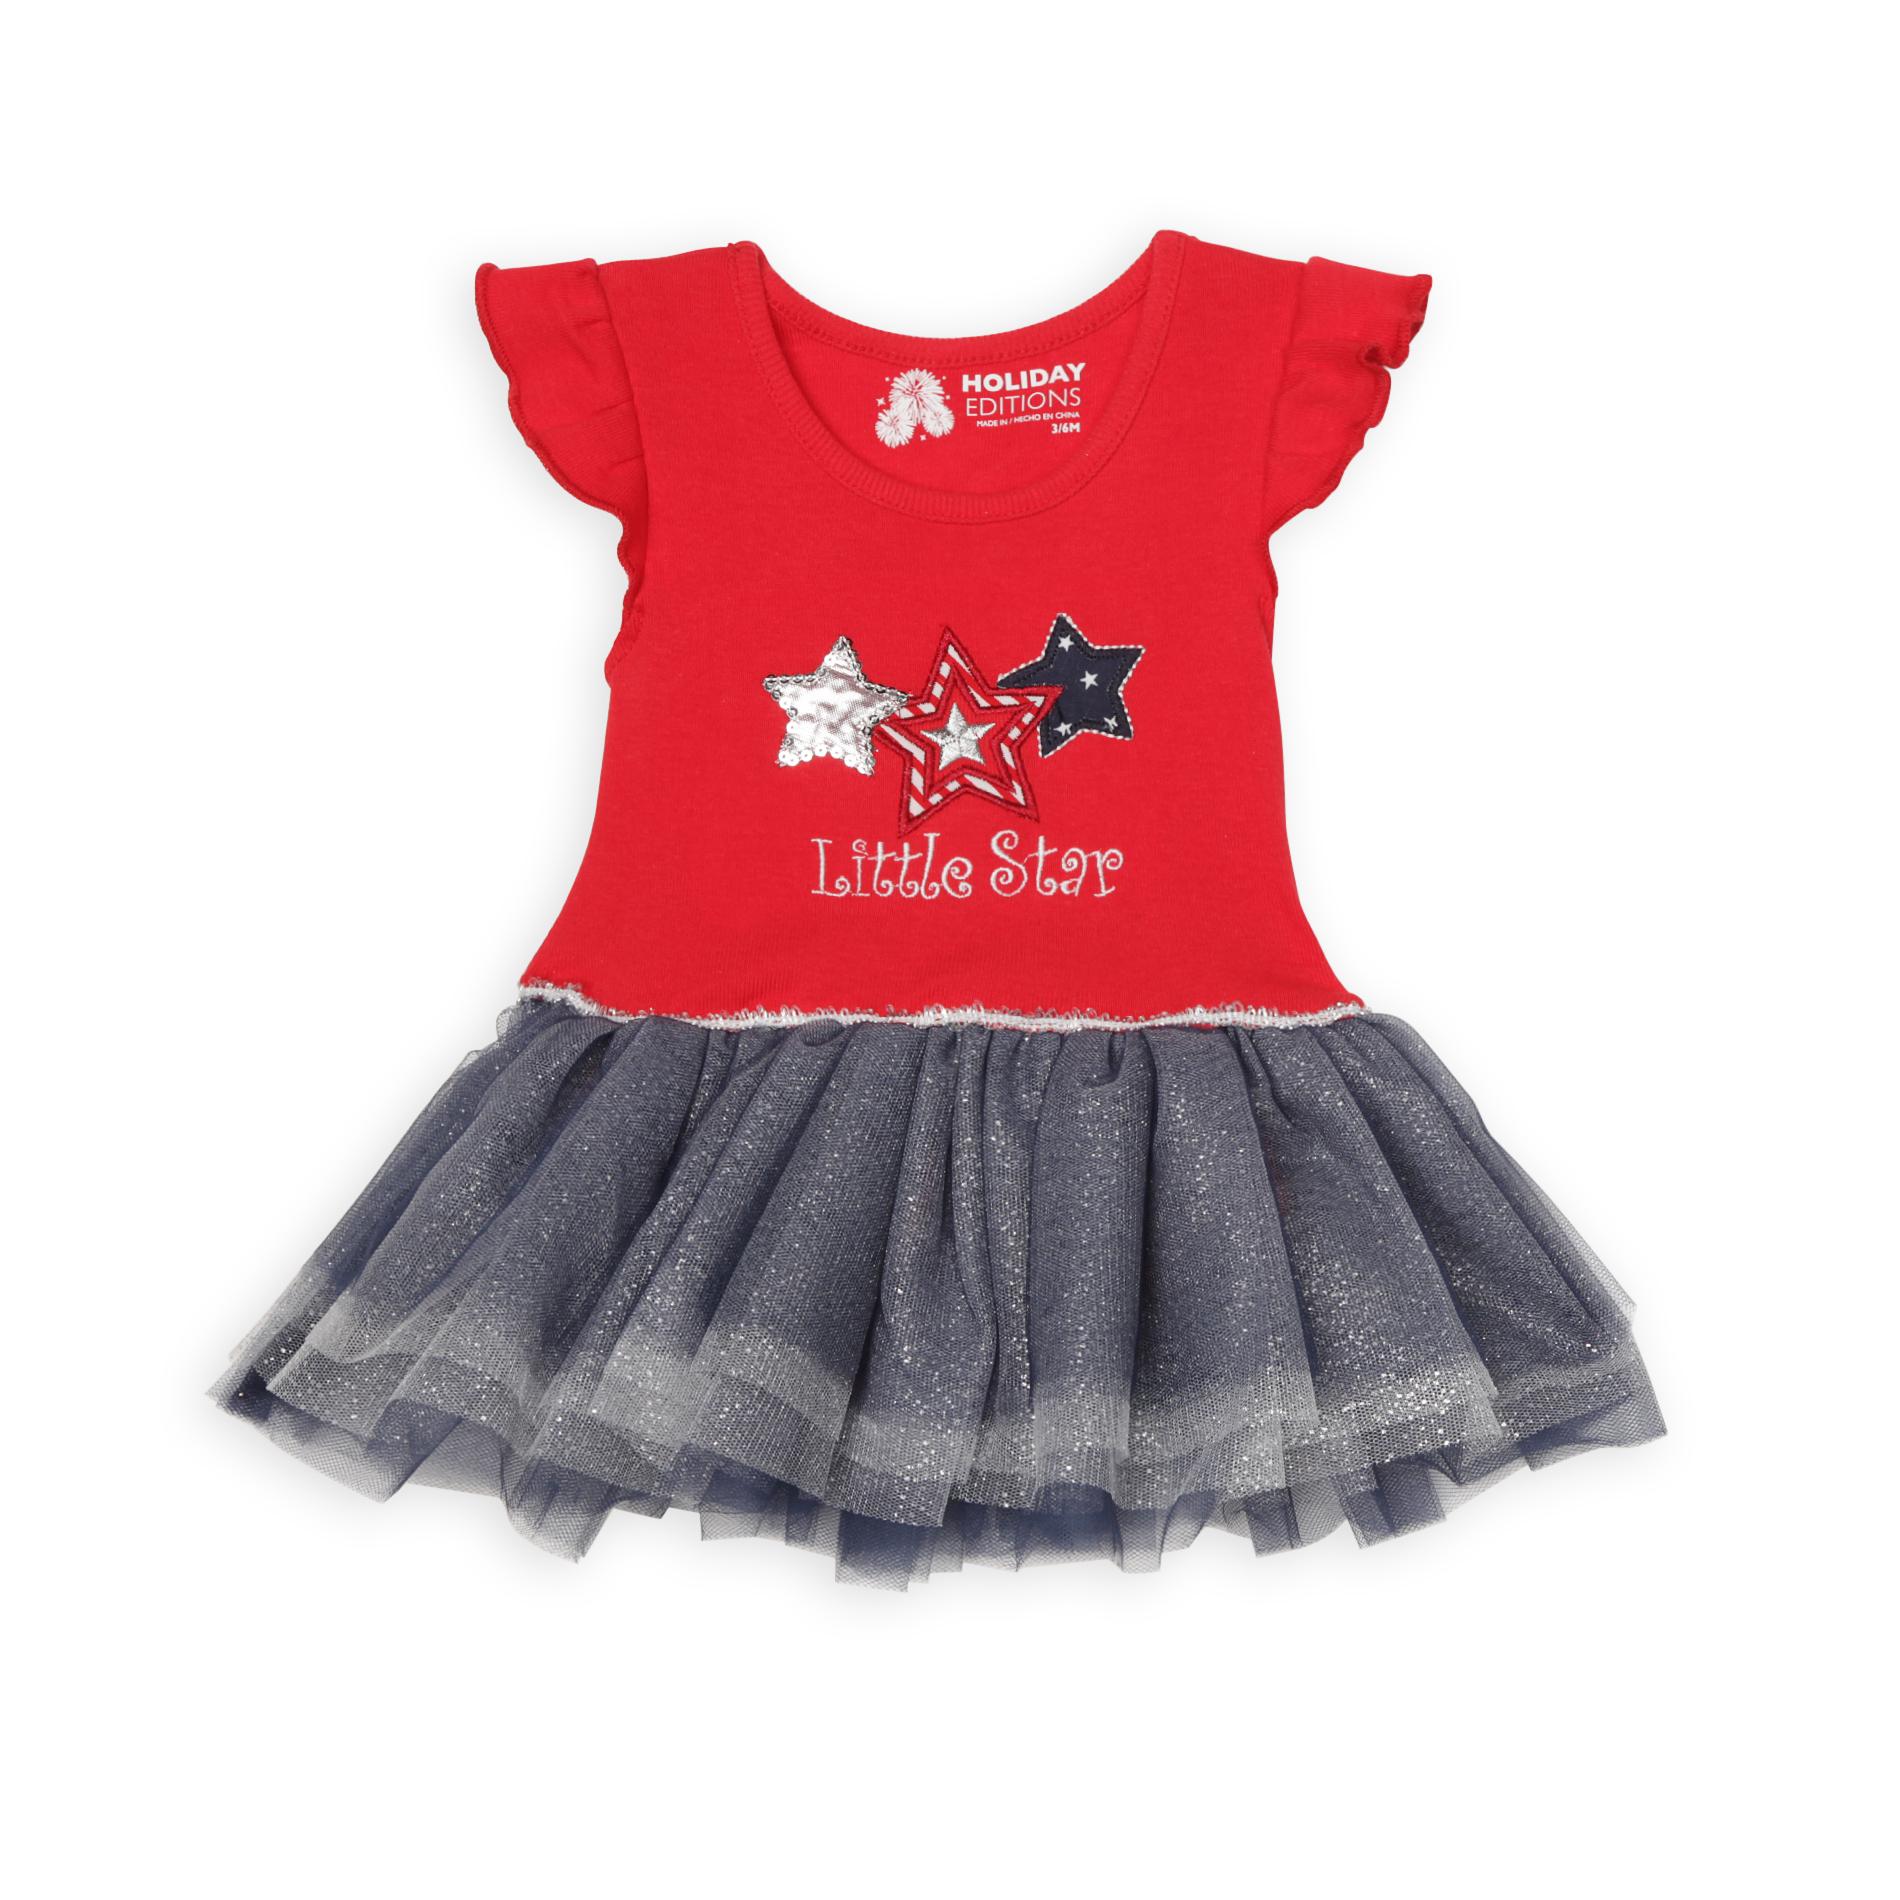 Holiday Editions Newborn Girl's Tutu Dress - Little Star